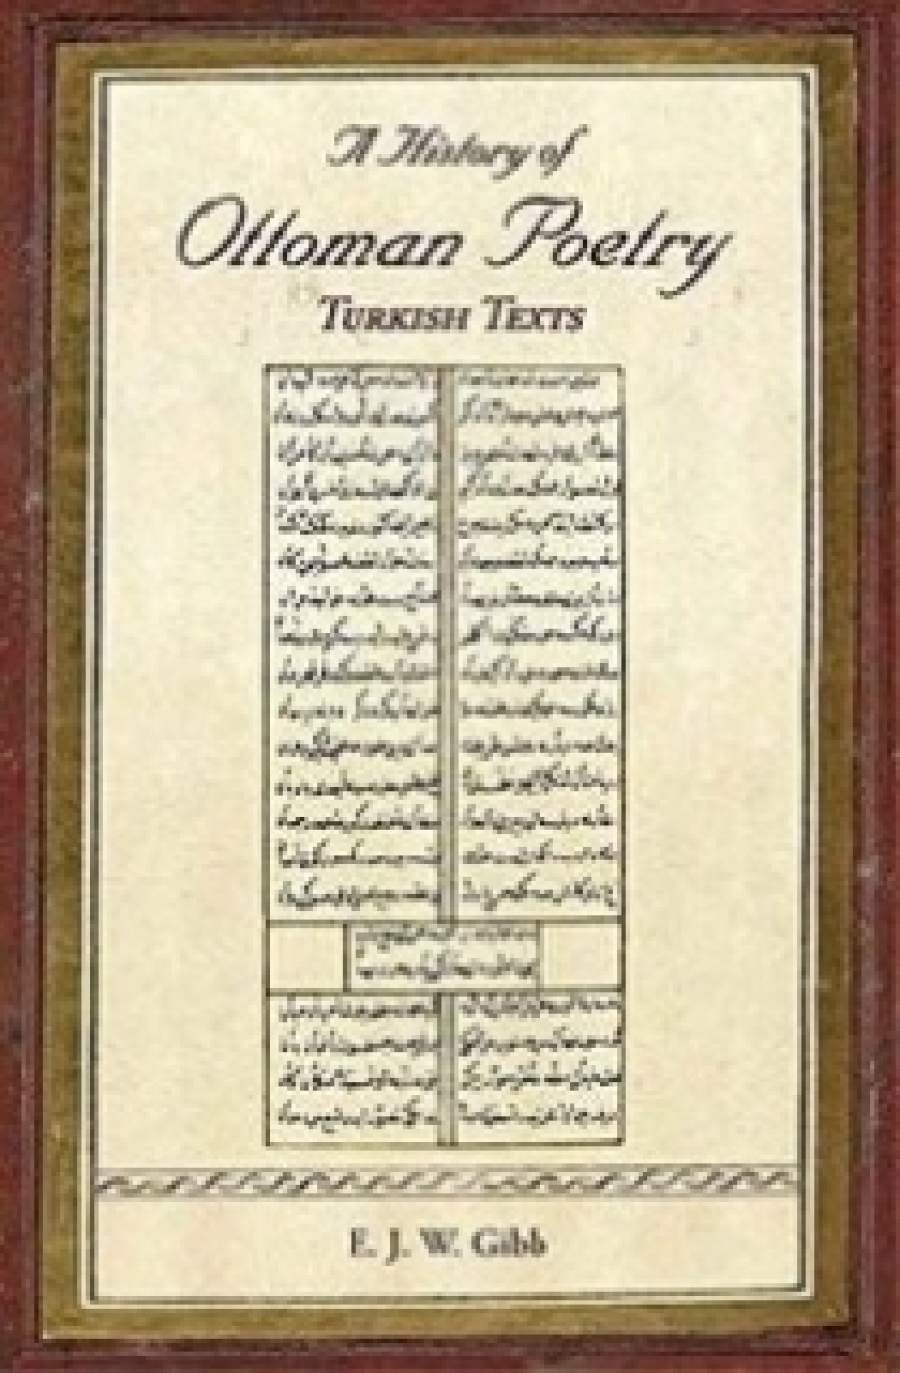 Gibb E J W A History of Ottoman Poetry Volume VI: Turkish Texts 